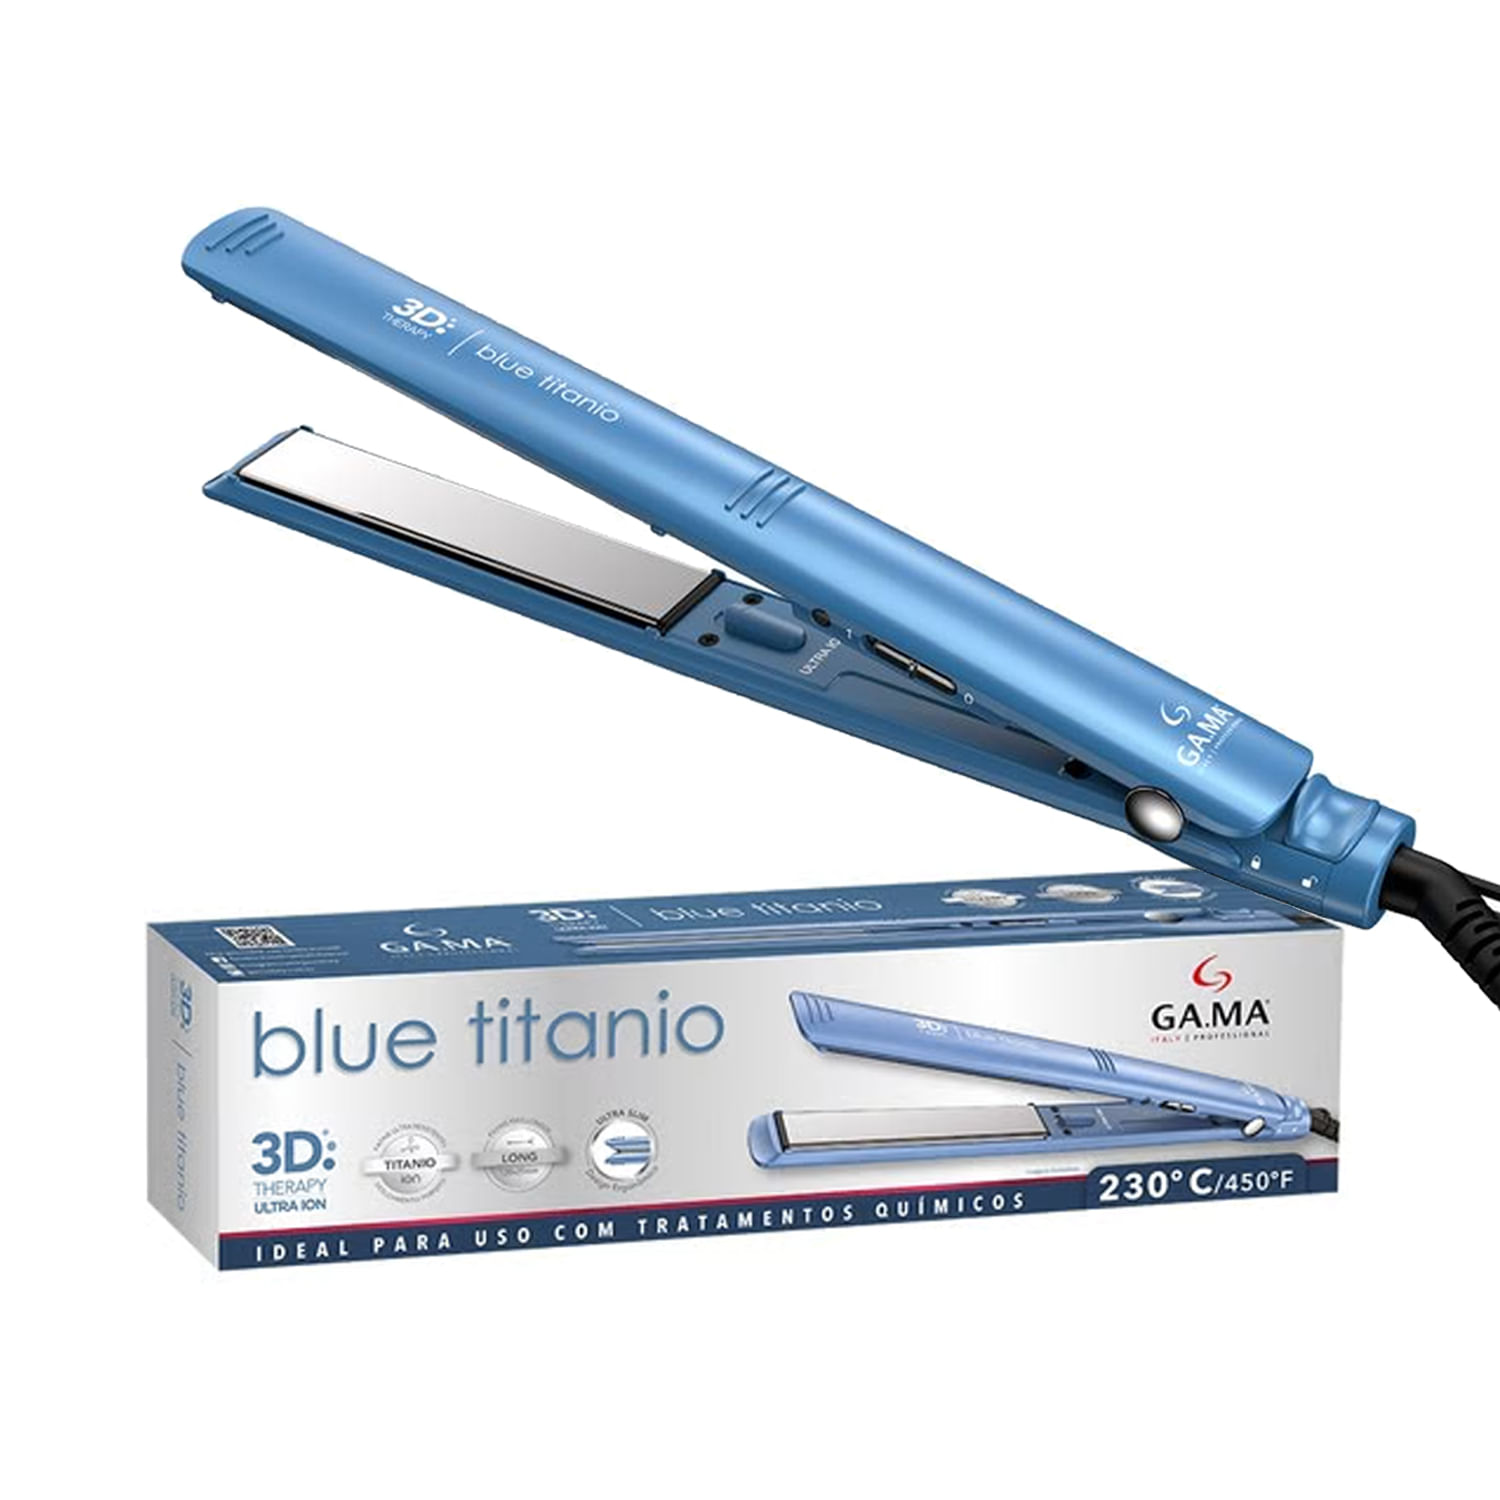 Plancha Alisadora Gama 3D Blue Titanio BECHS0000002426 Azul